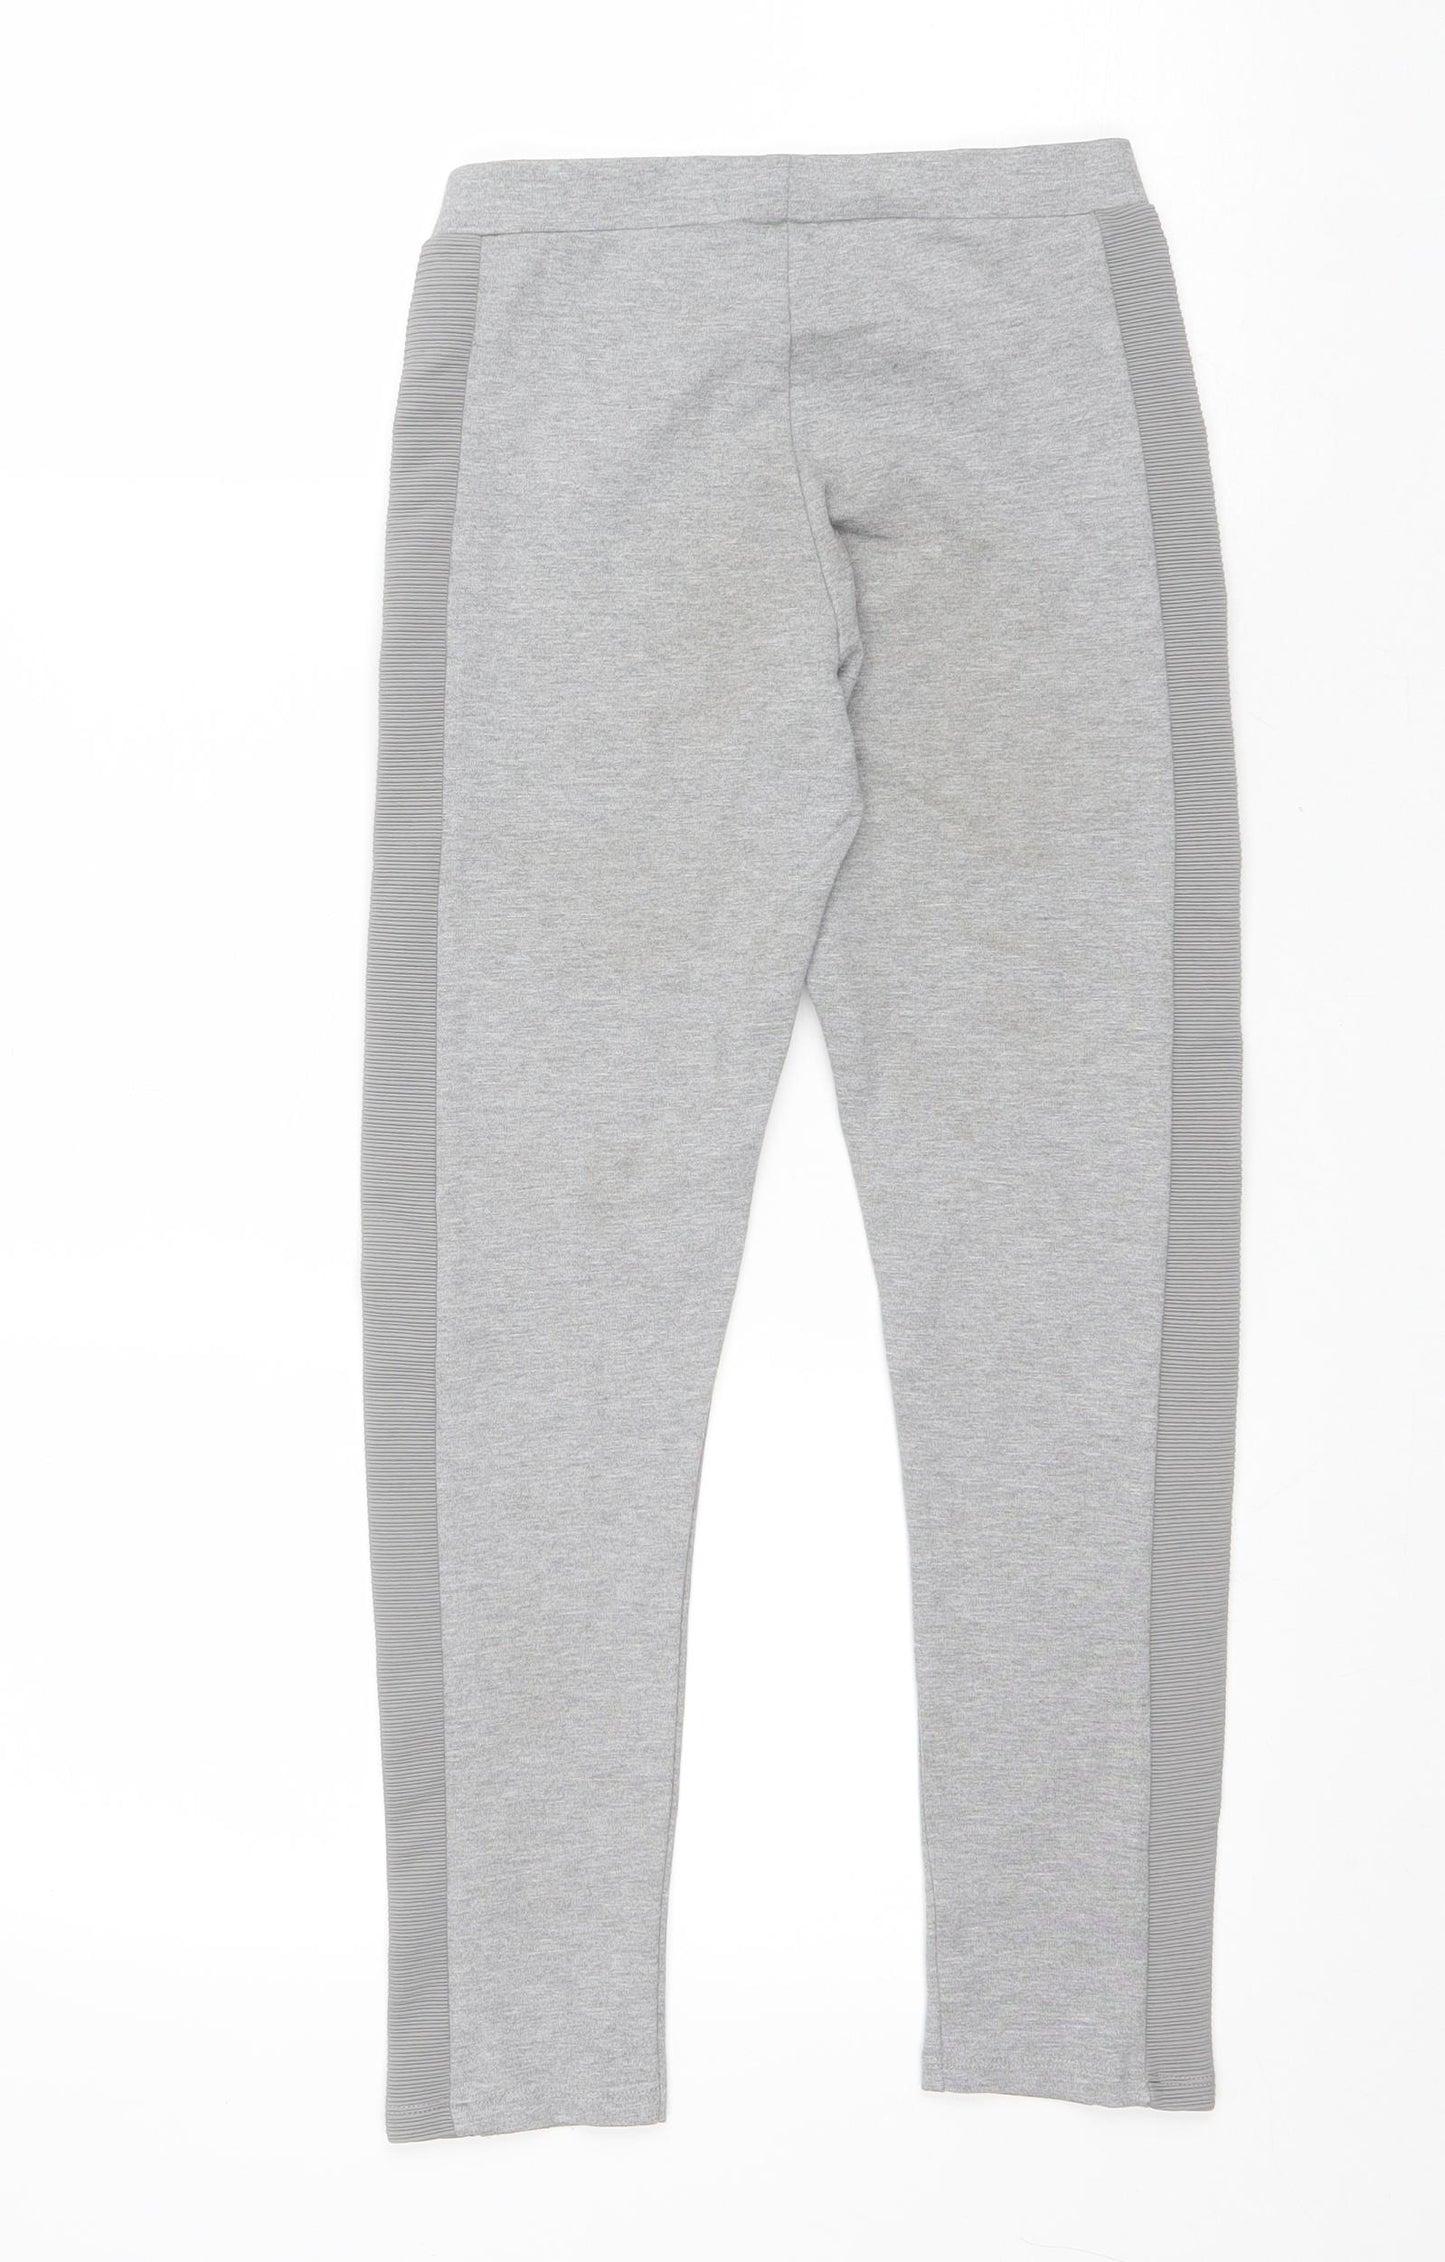 Marks and Spencer Girls Grey Polyester Jegging Trousers Size 11 Years Regular Drawstring - Leggins